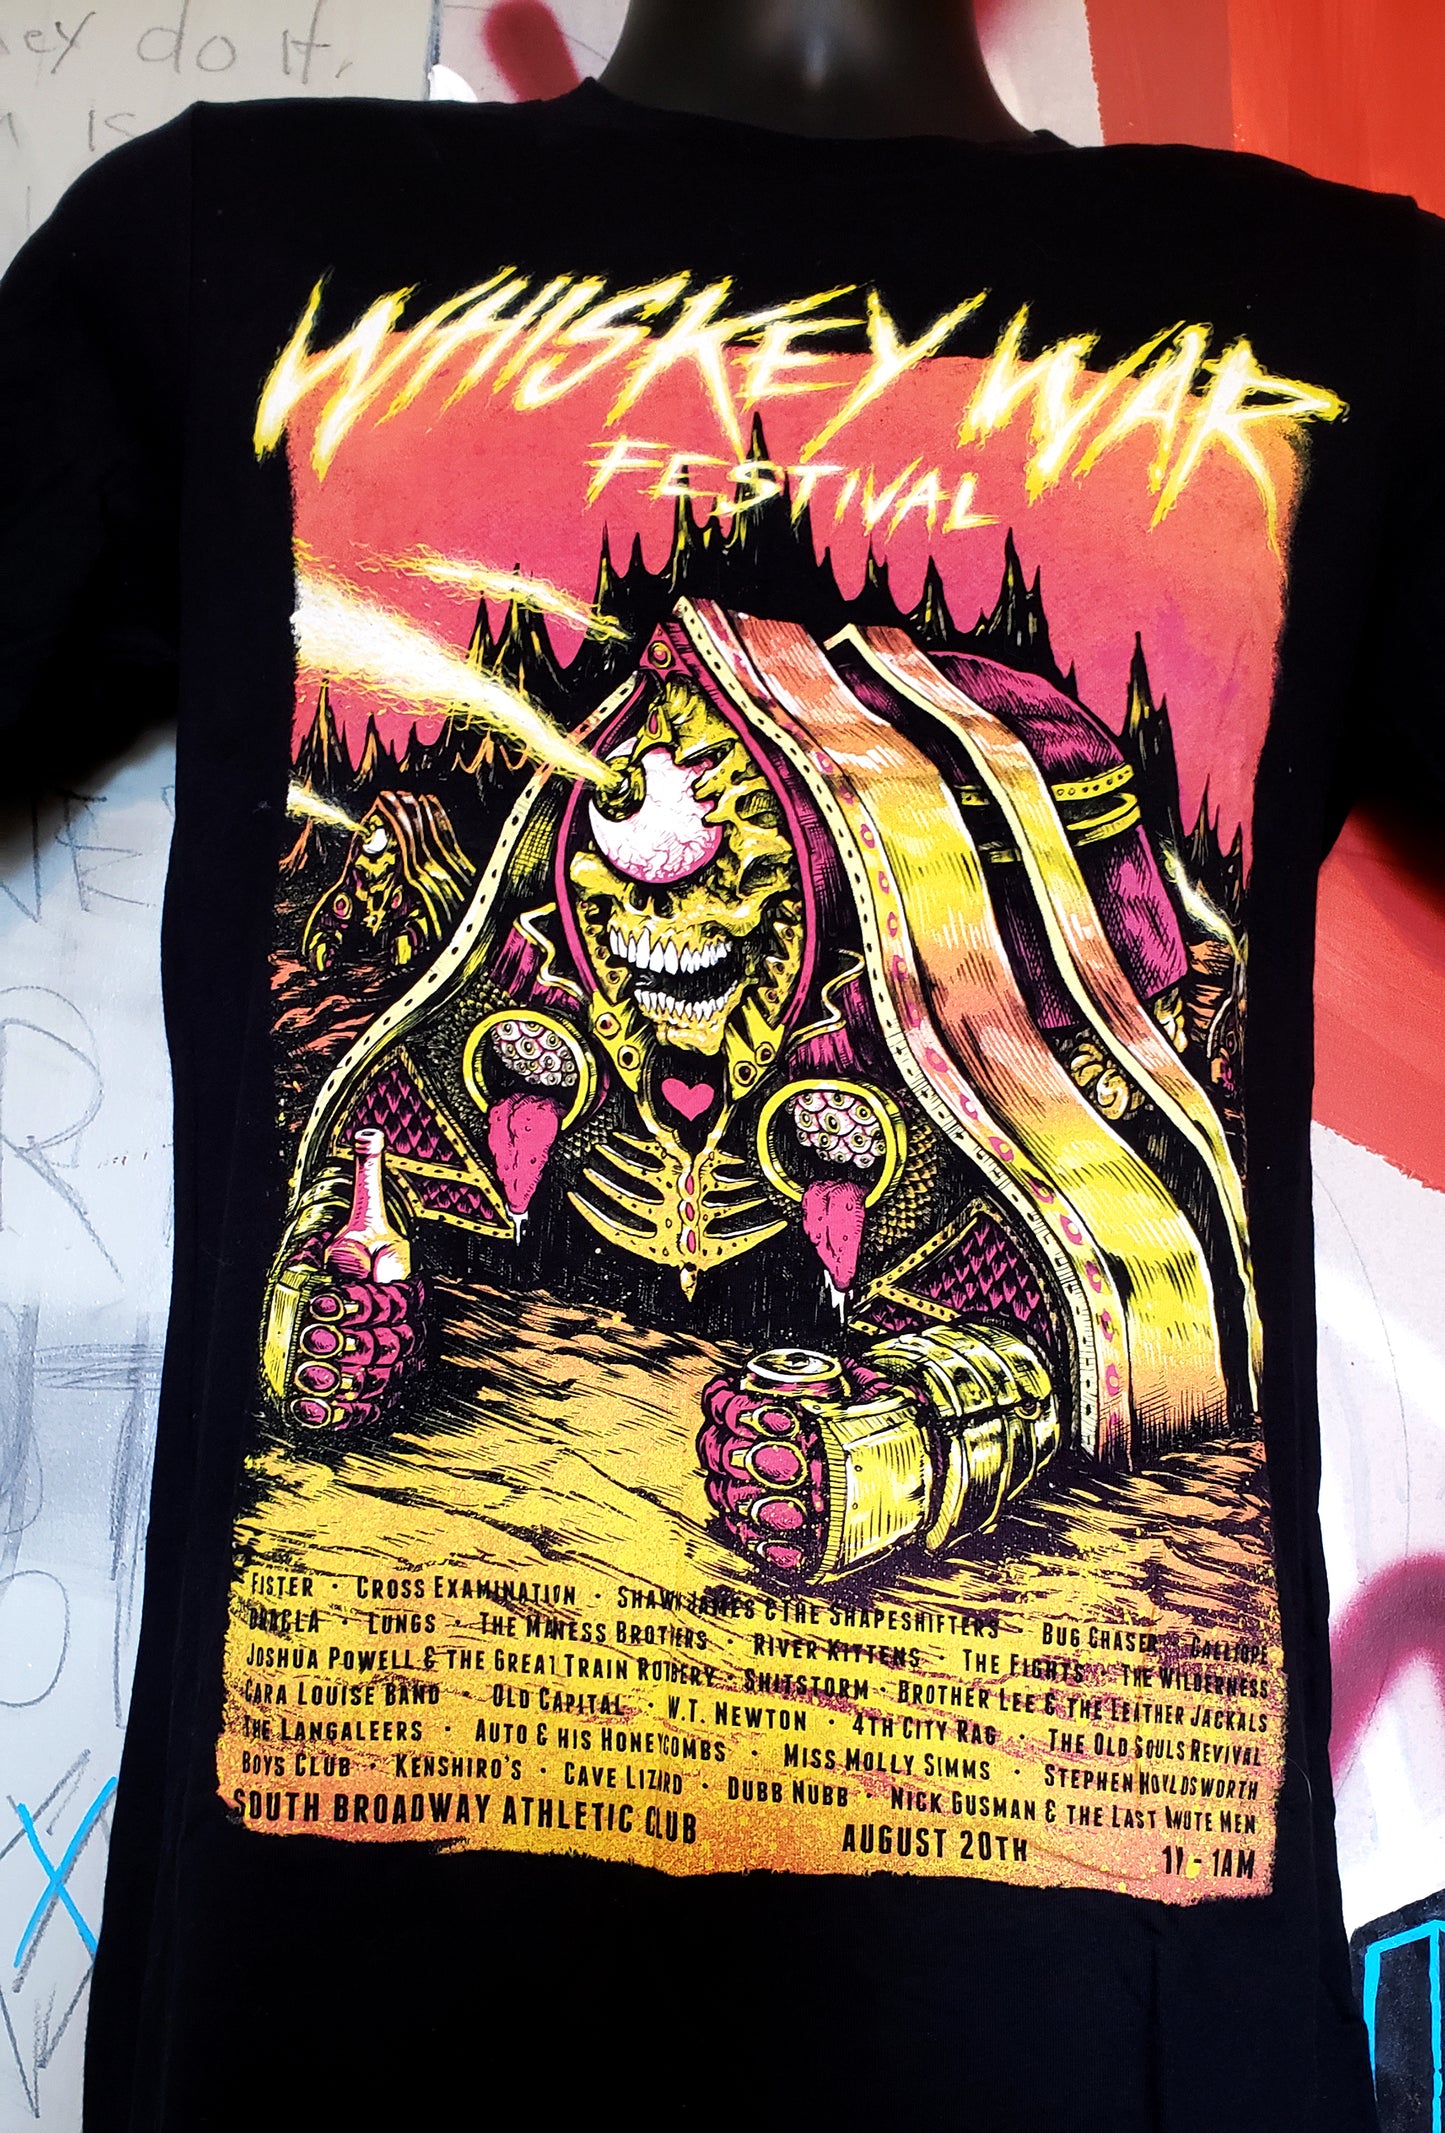 Whiskey War Fest 2016 T-Shirt